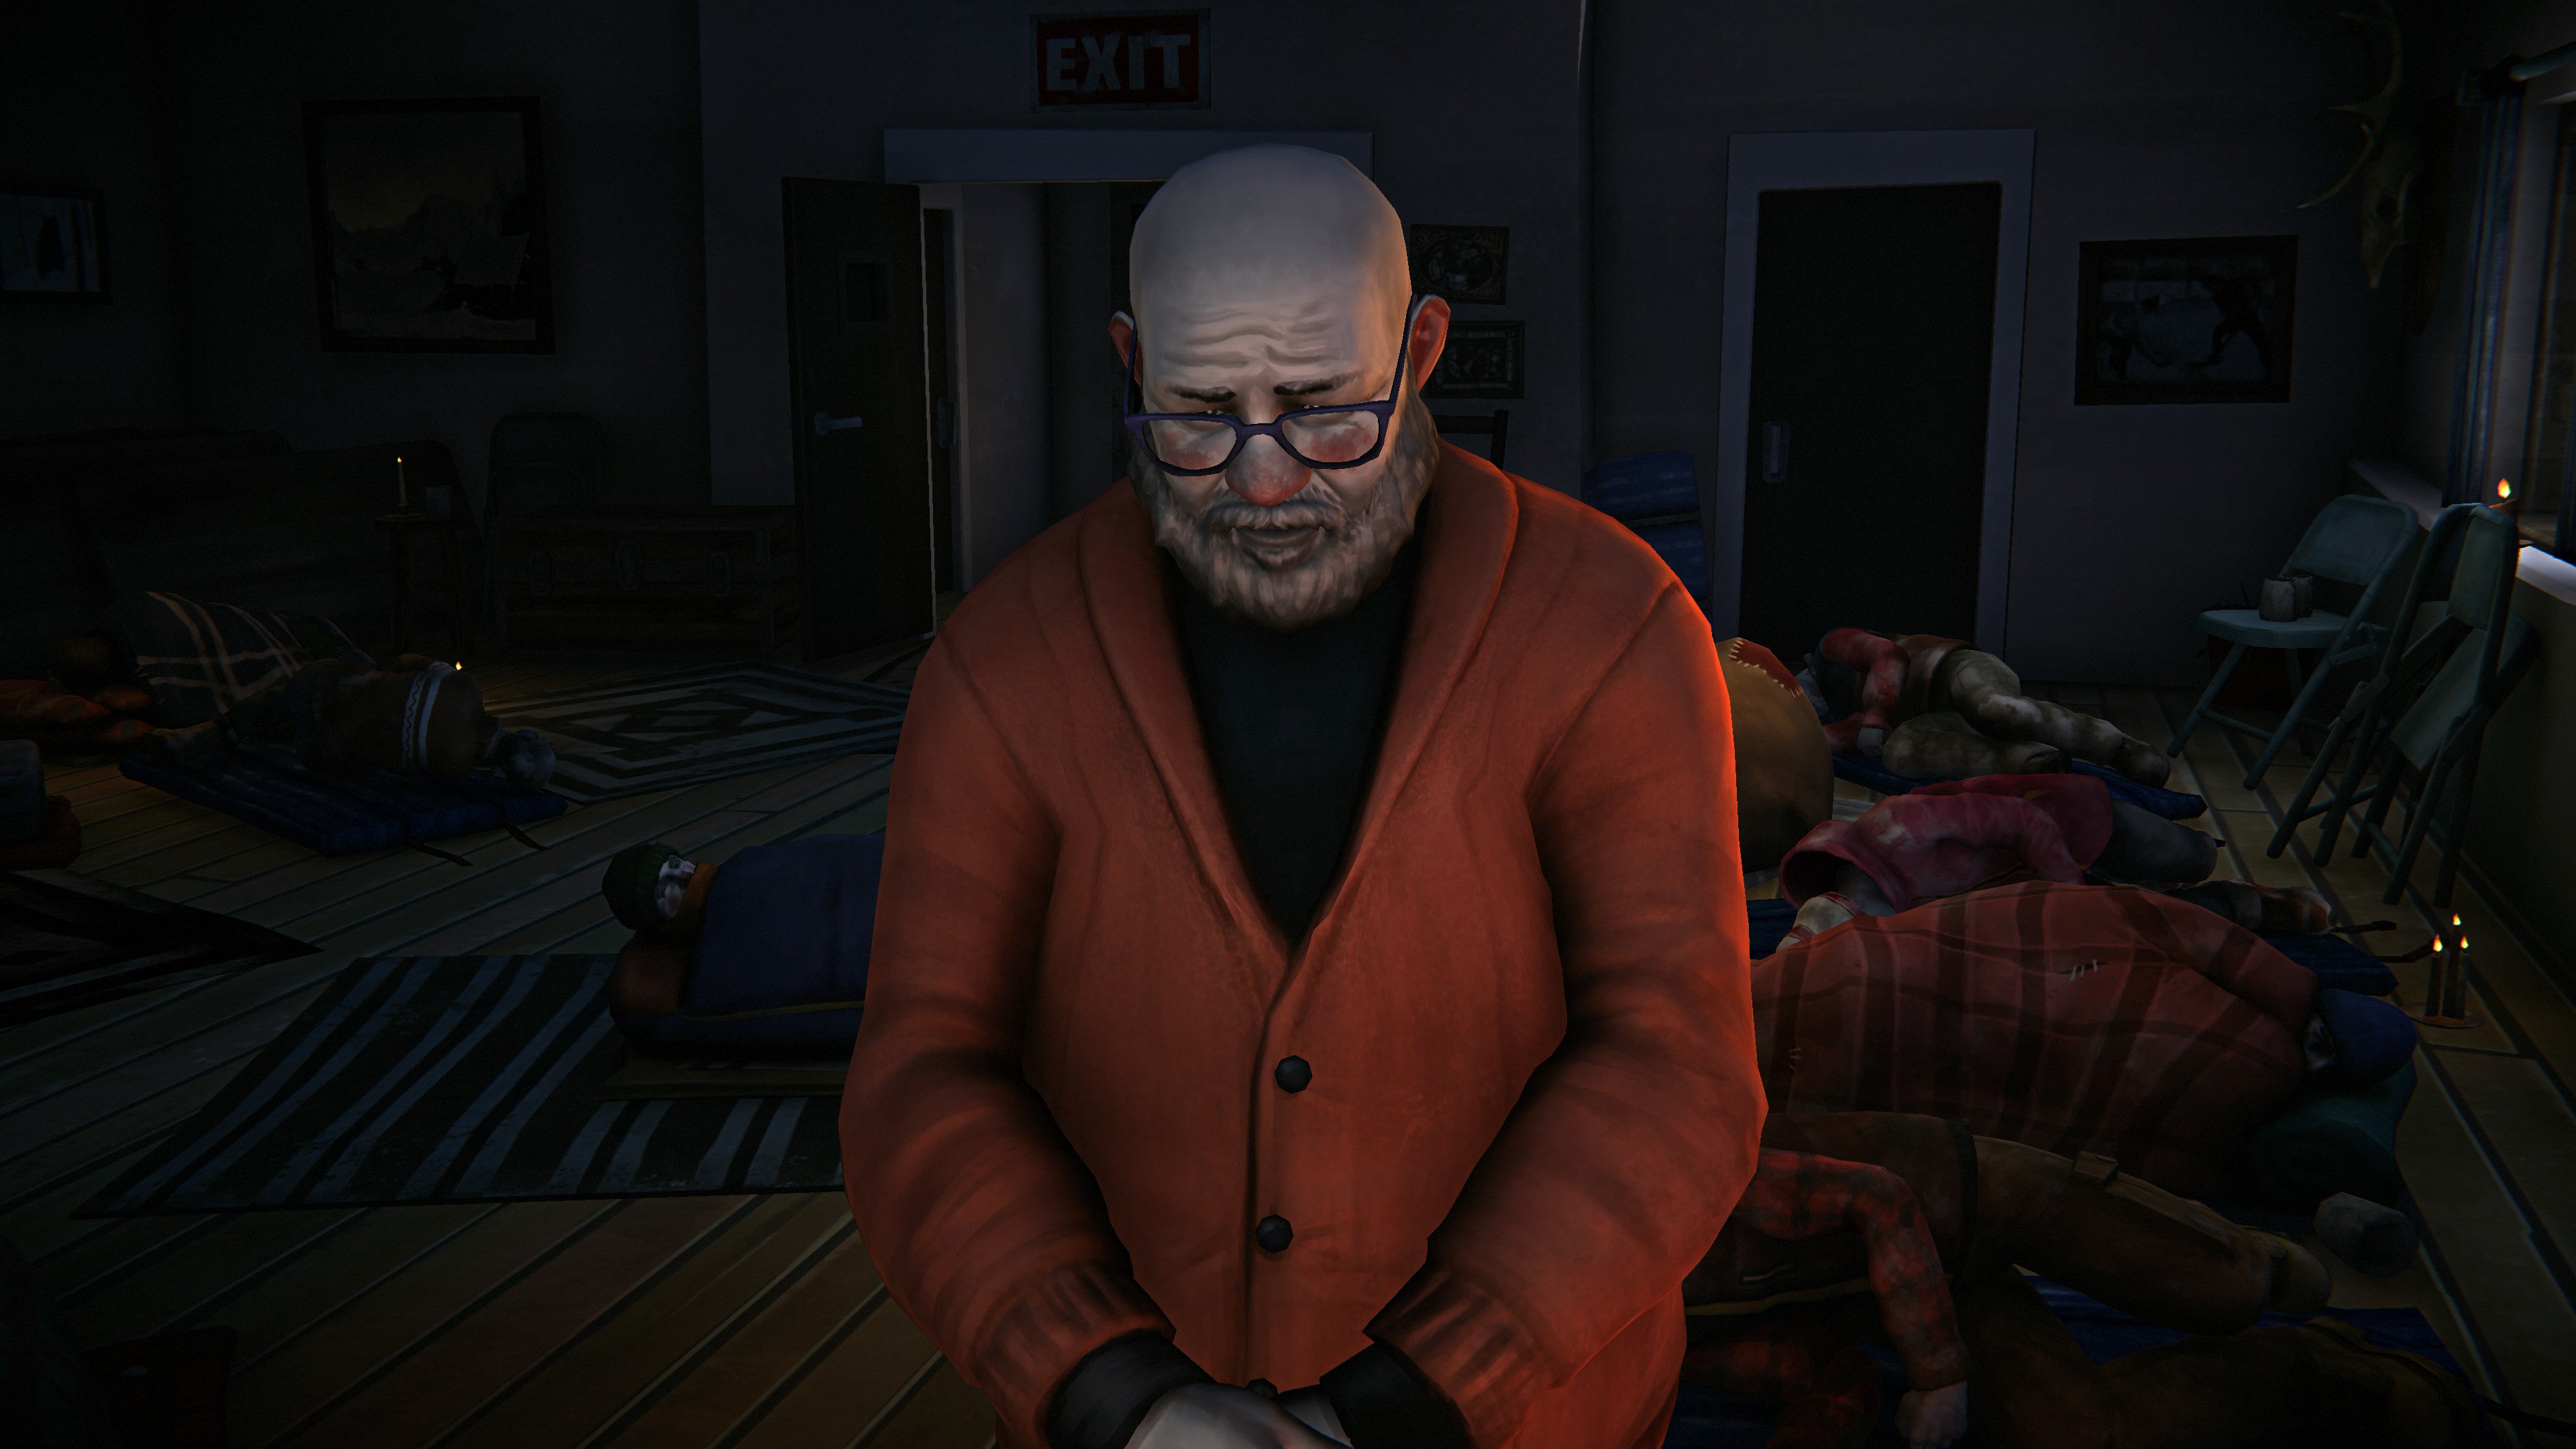 A ruddy man in a room of sleepers in a The Long Dark: Wintermute screenshot.